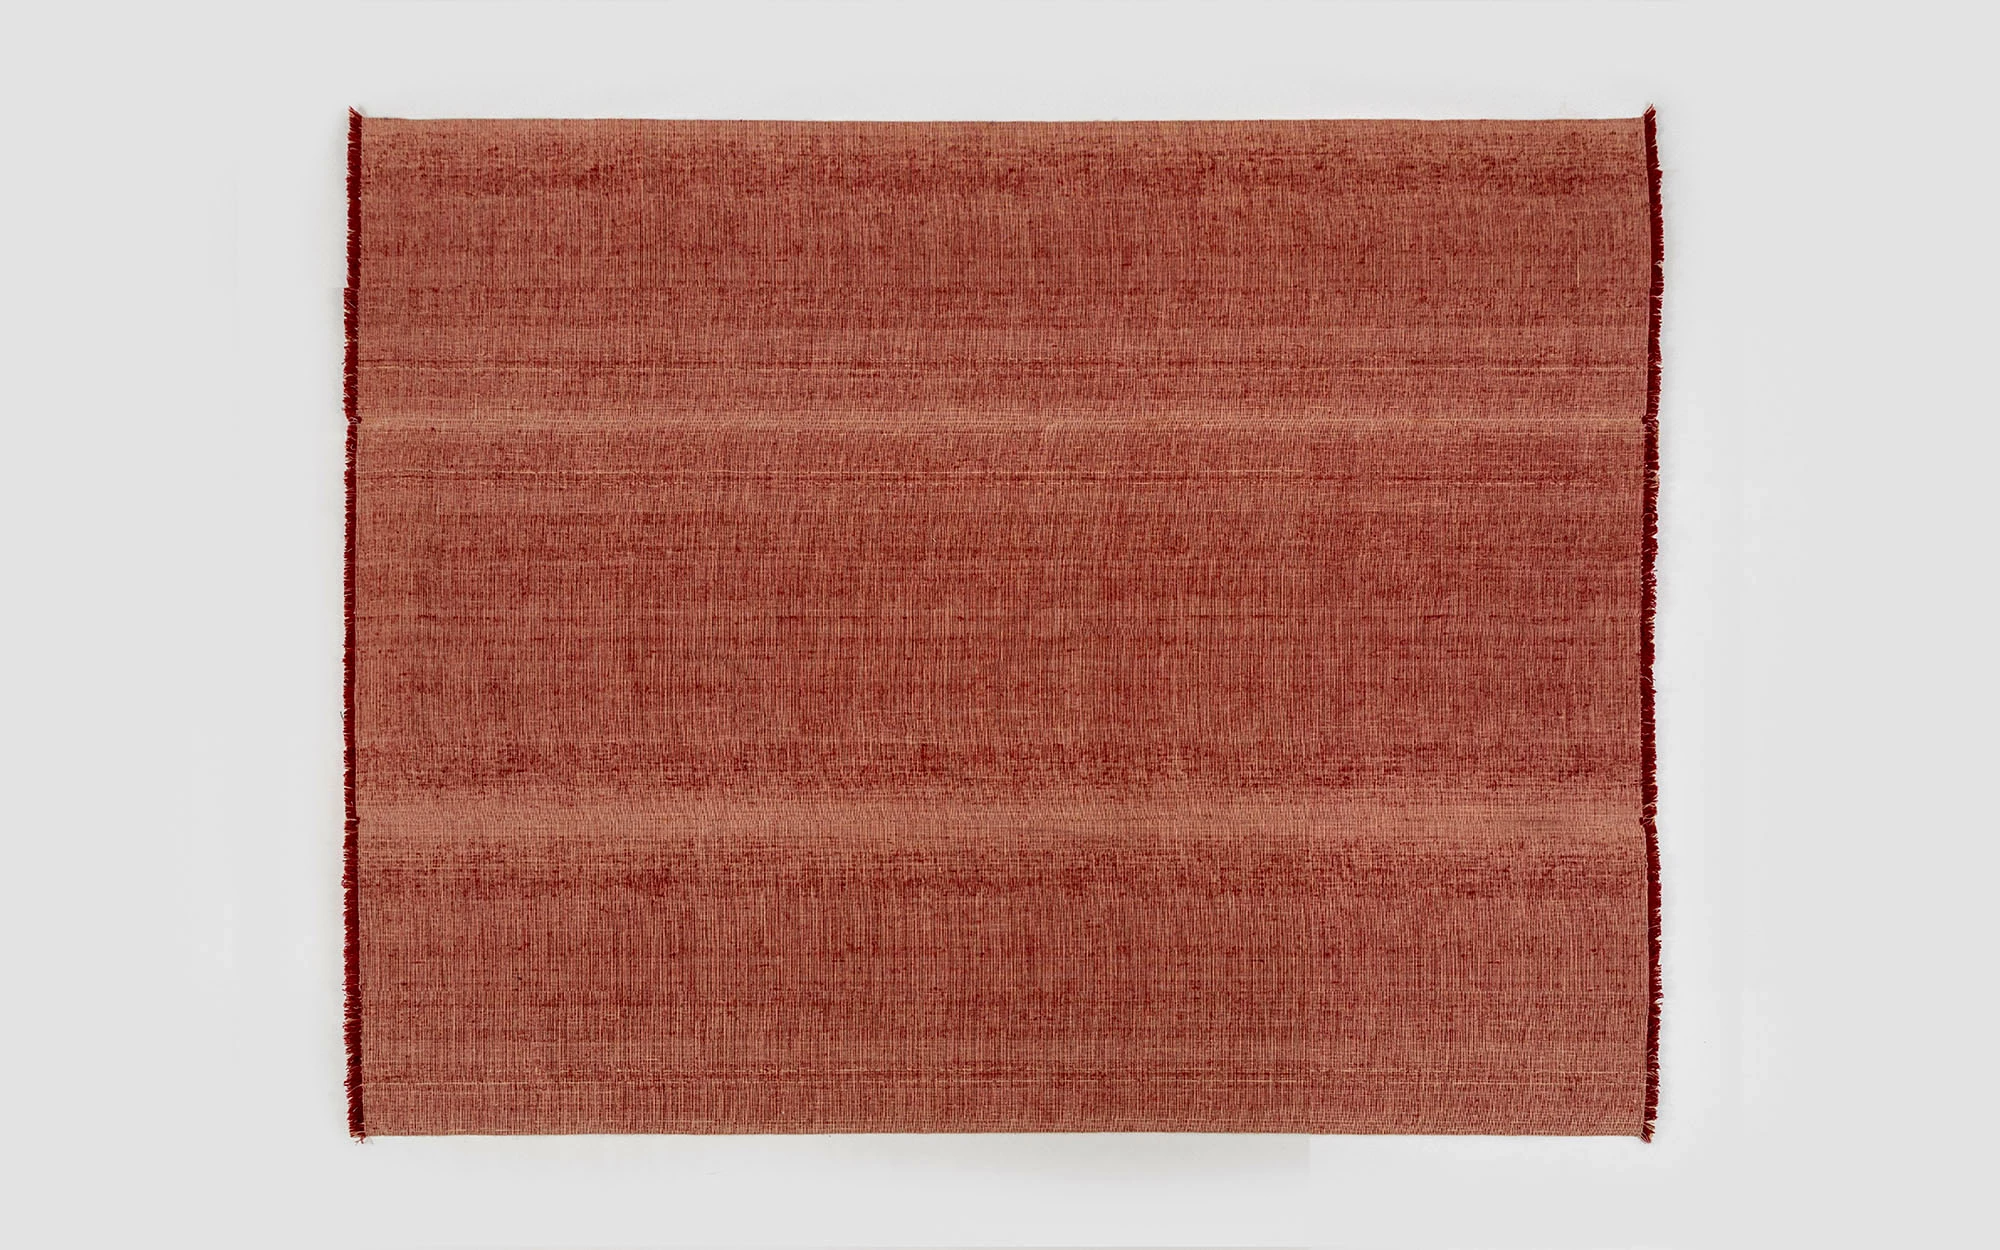 Wilton Carpet S - Ronan & Erwan Bouroullec - Table light - Galerie kreo